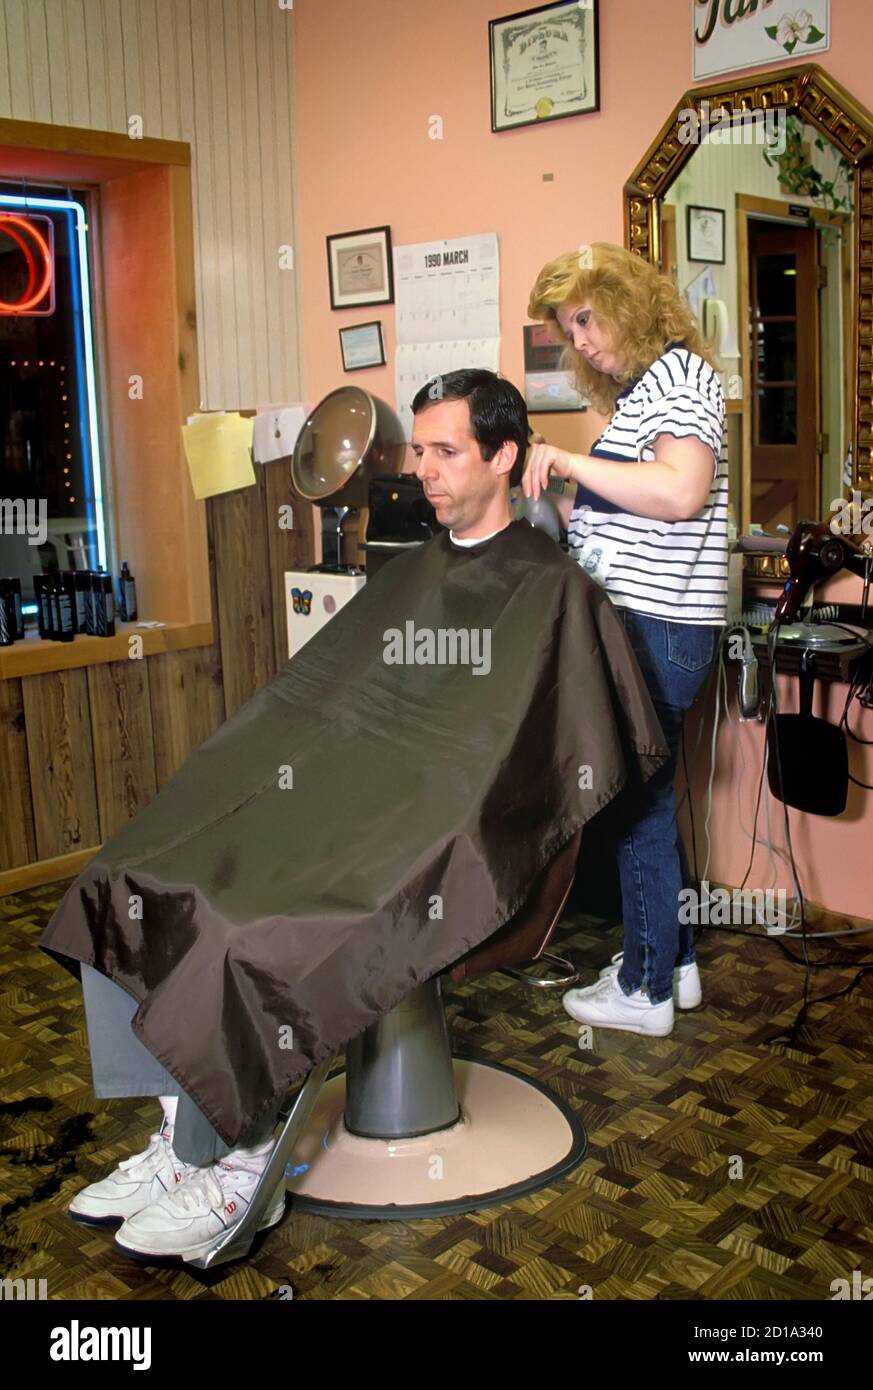 Female hair stylist barber cuts an adult male's hair Stock Photo